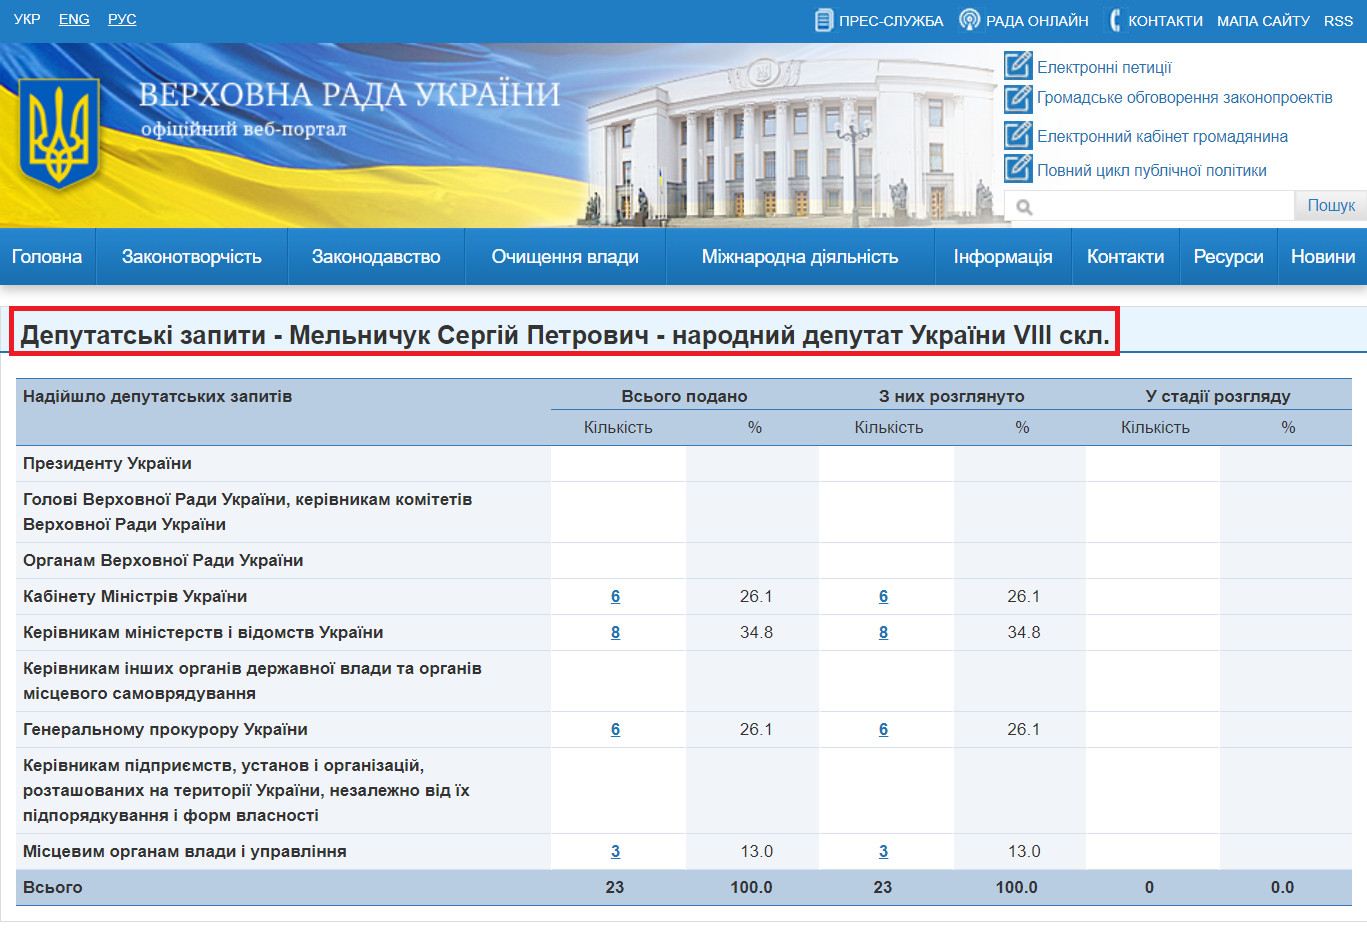 http://w1.c1.rada.gov.ua/pls/zweb2/wcadr42d?sklikannja=9&kod8011=18039